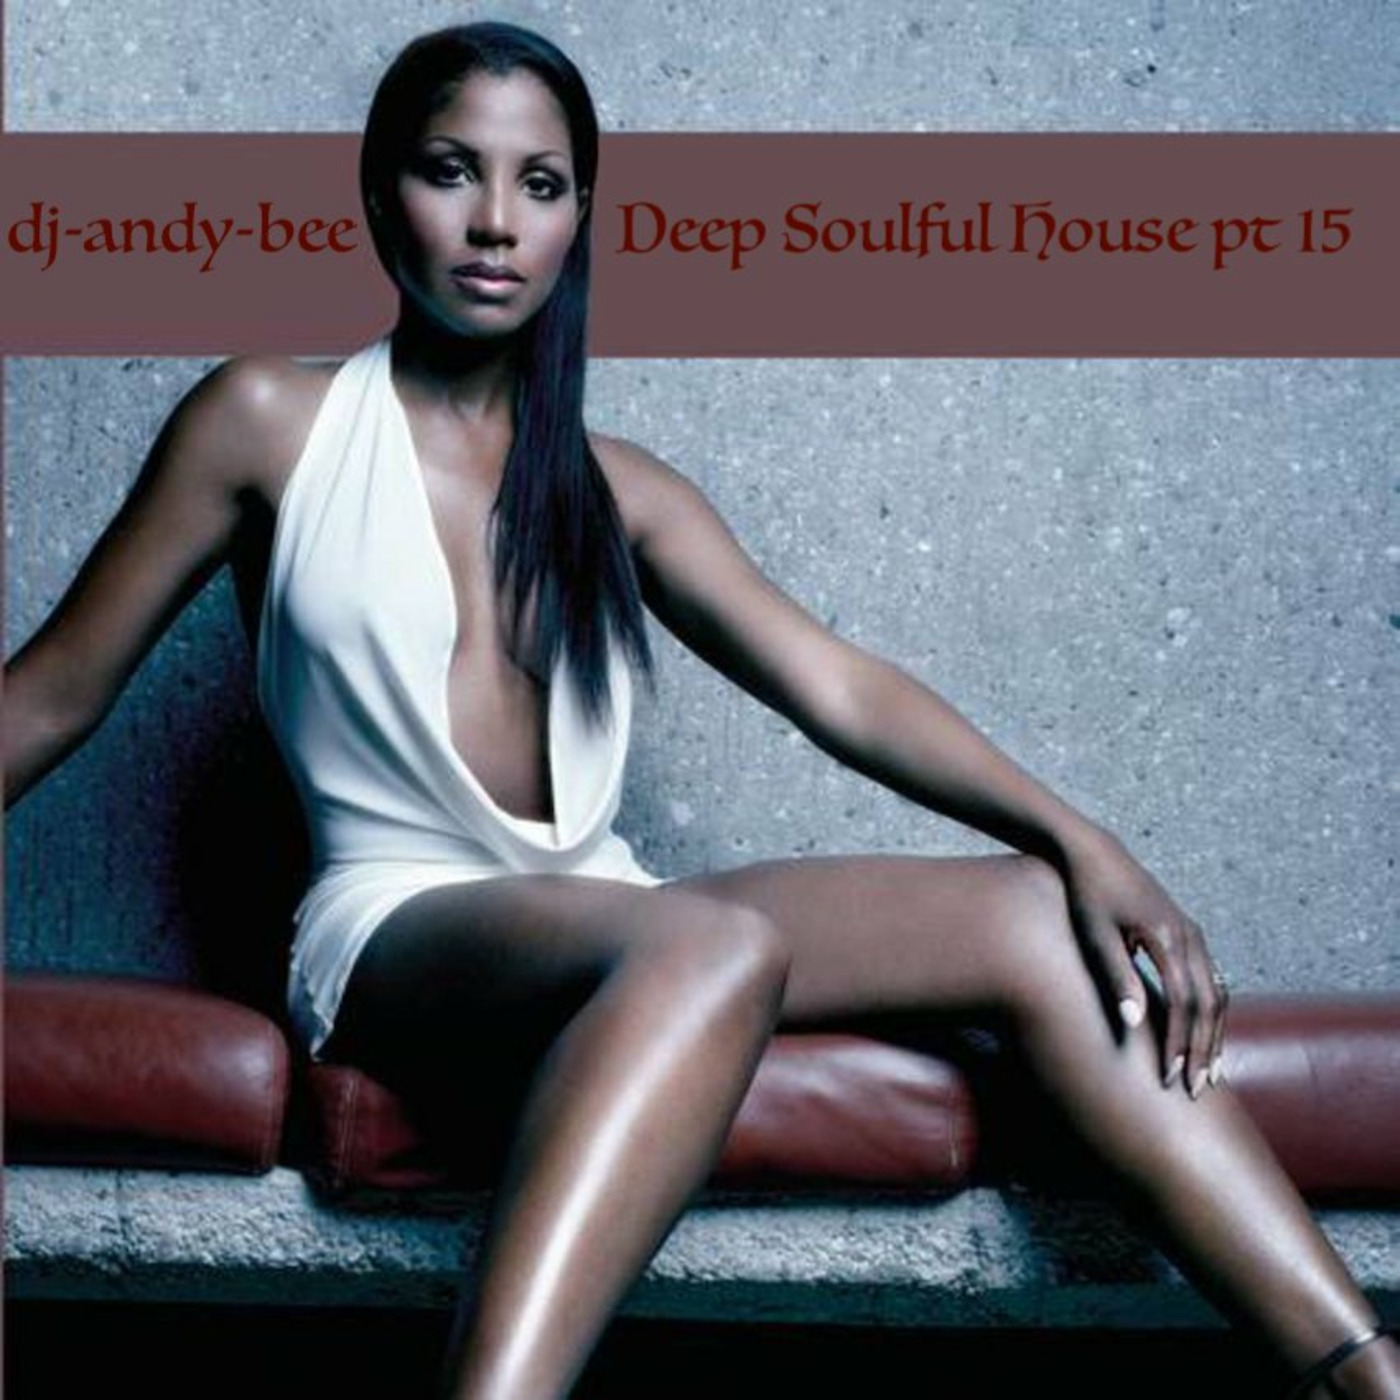 Deep Soulful House pt 15